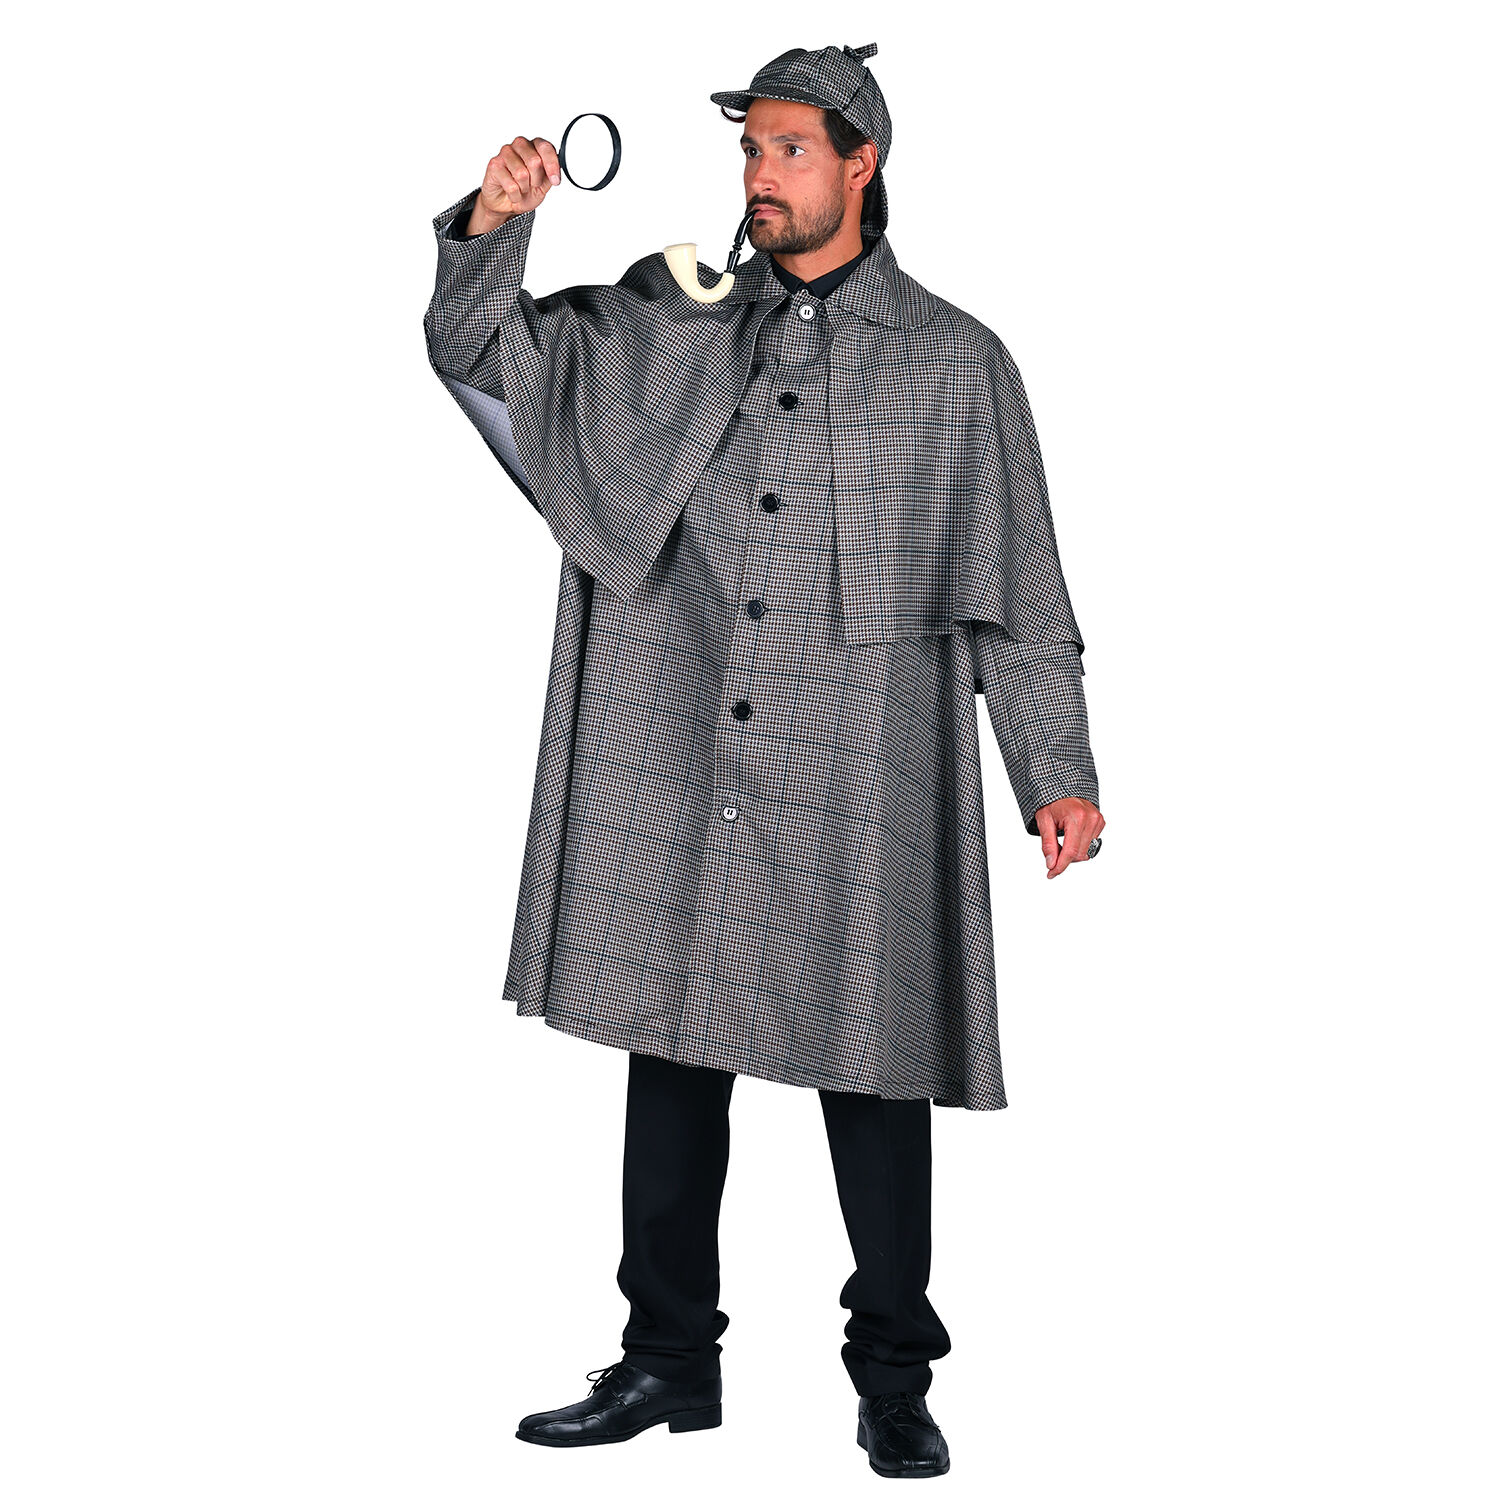 NEU Herren-Kostüm Sherlock Holmes, Detektiv-Mantel, Gr. S